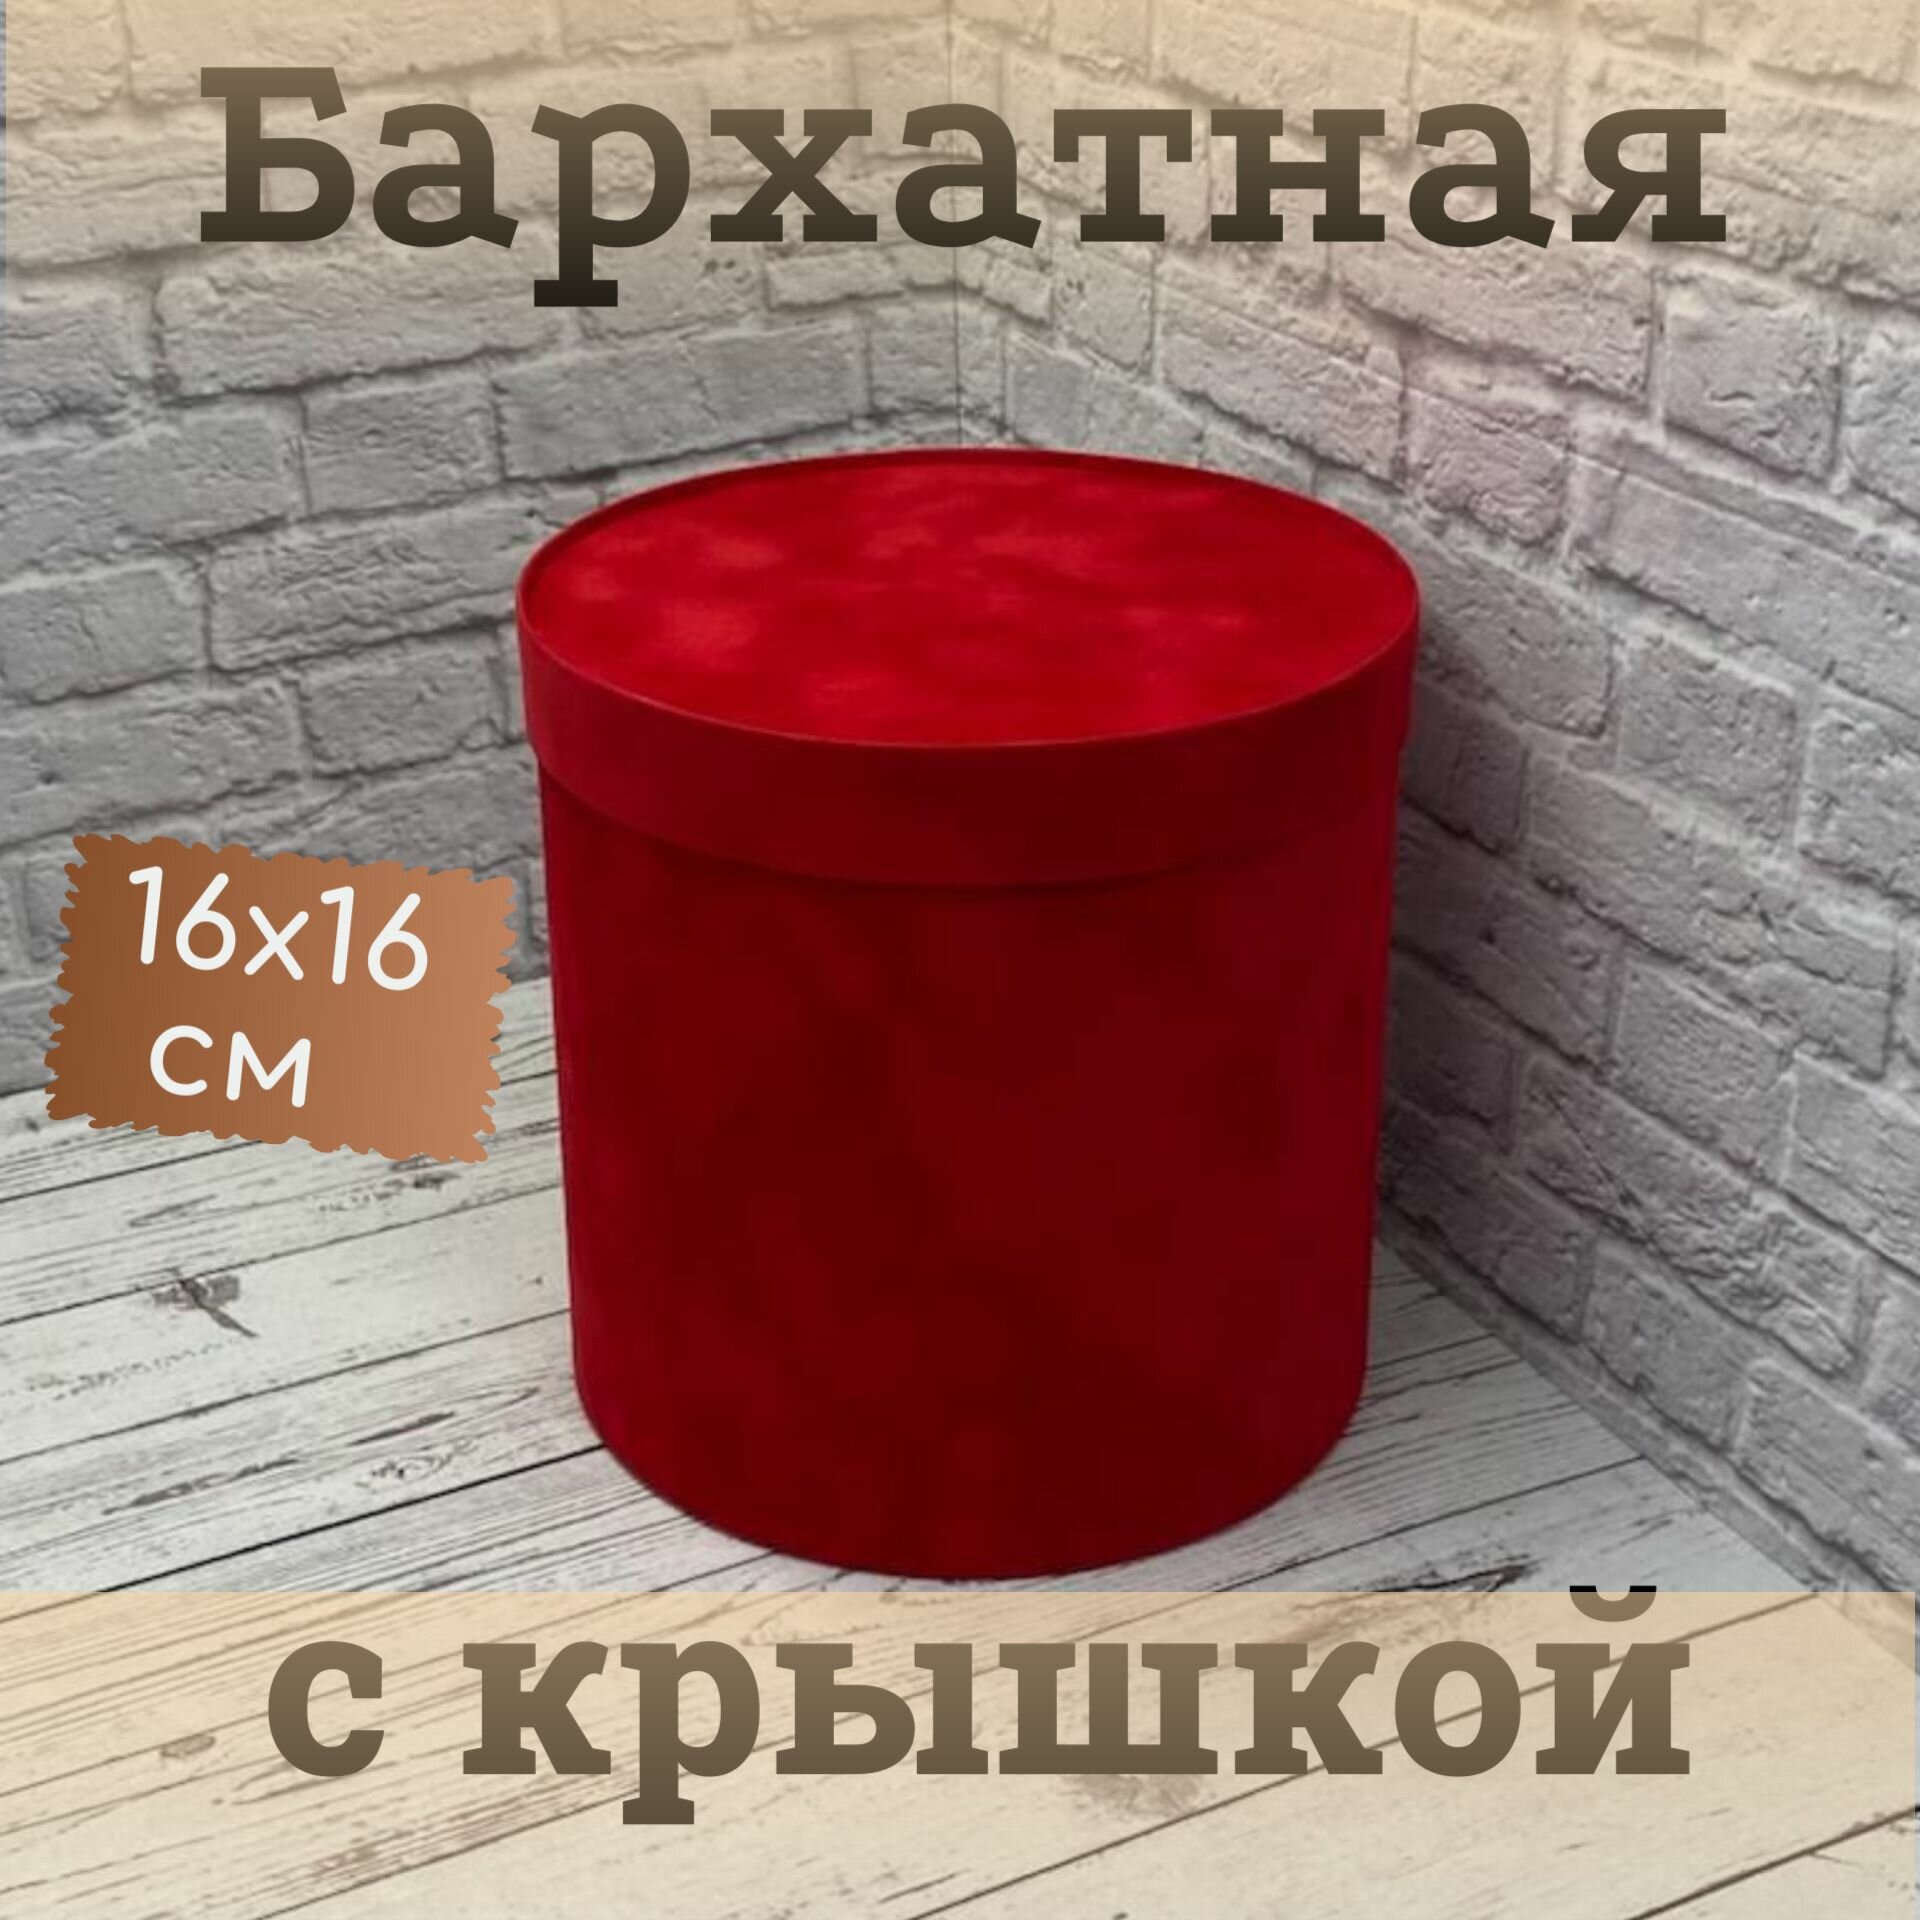 Бархатная круглая подарочная коробка с крышкой 16х16, цвет красный